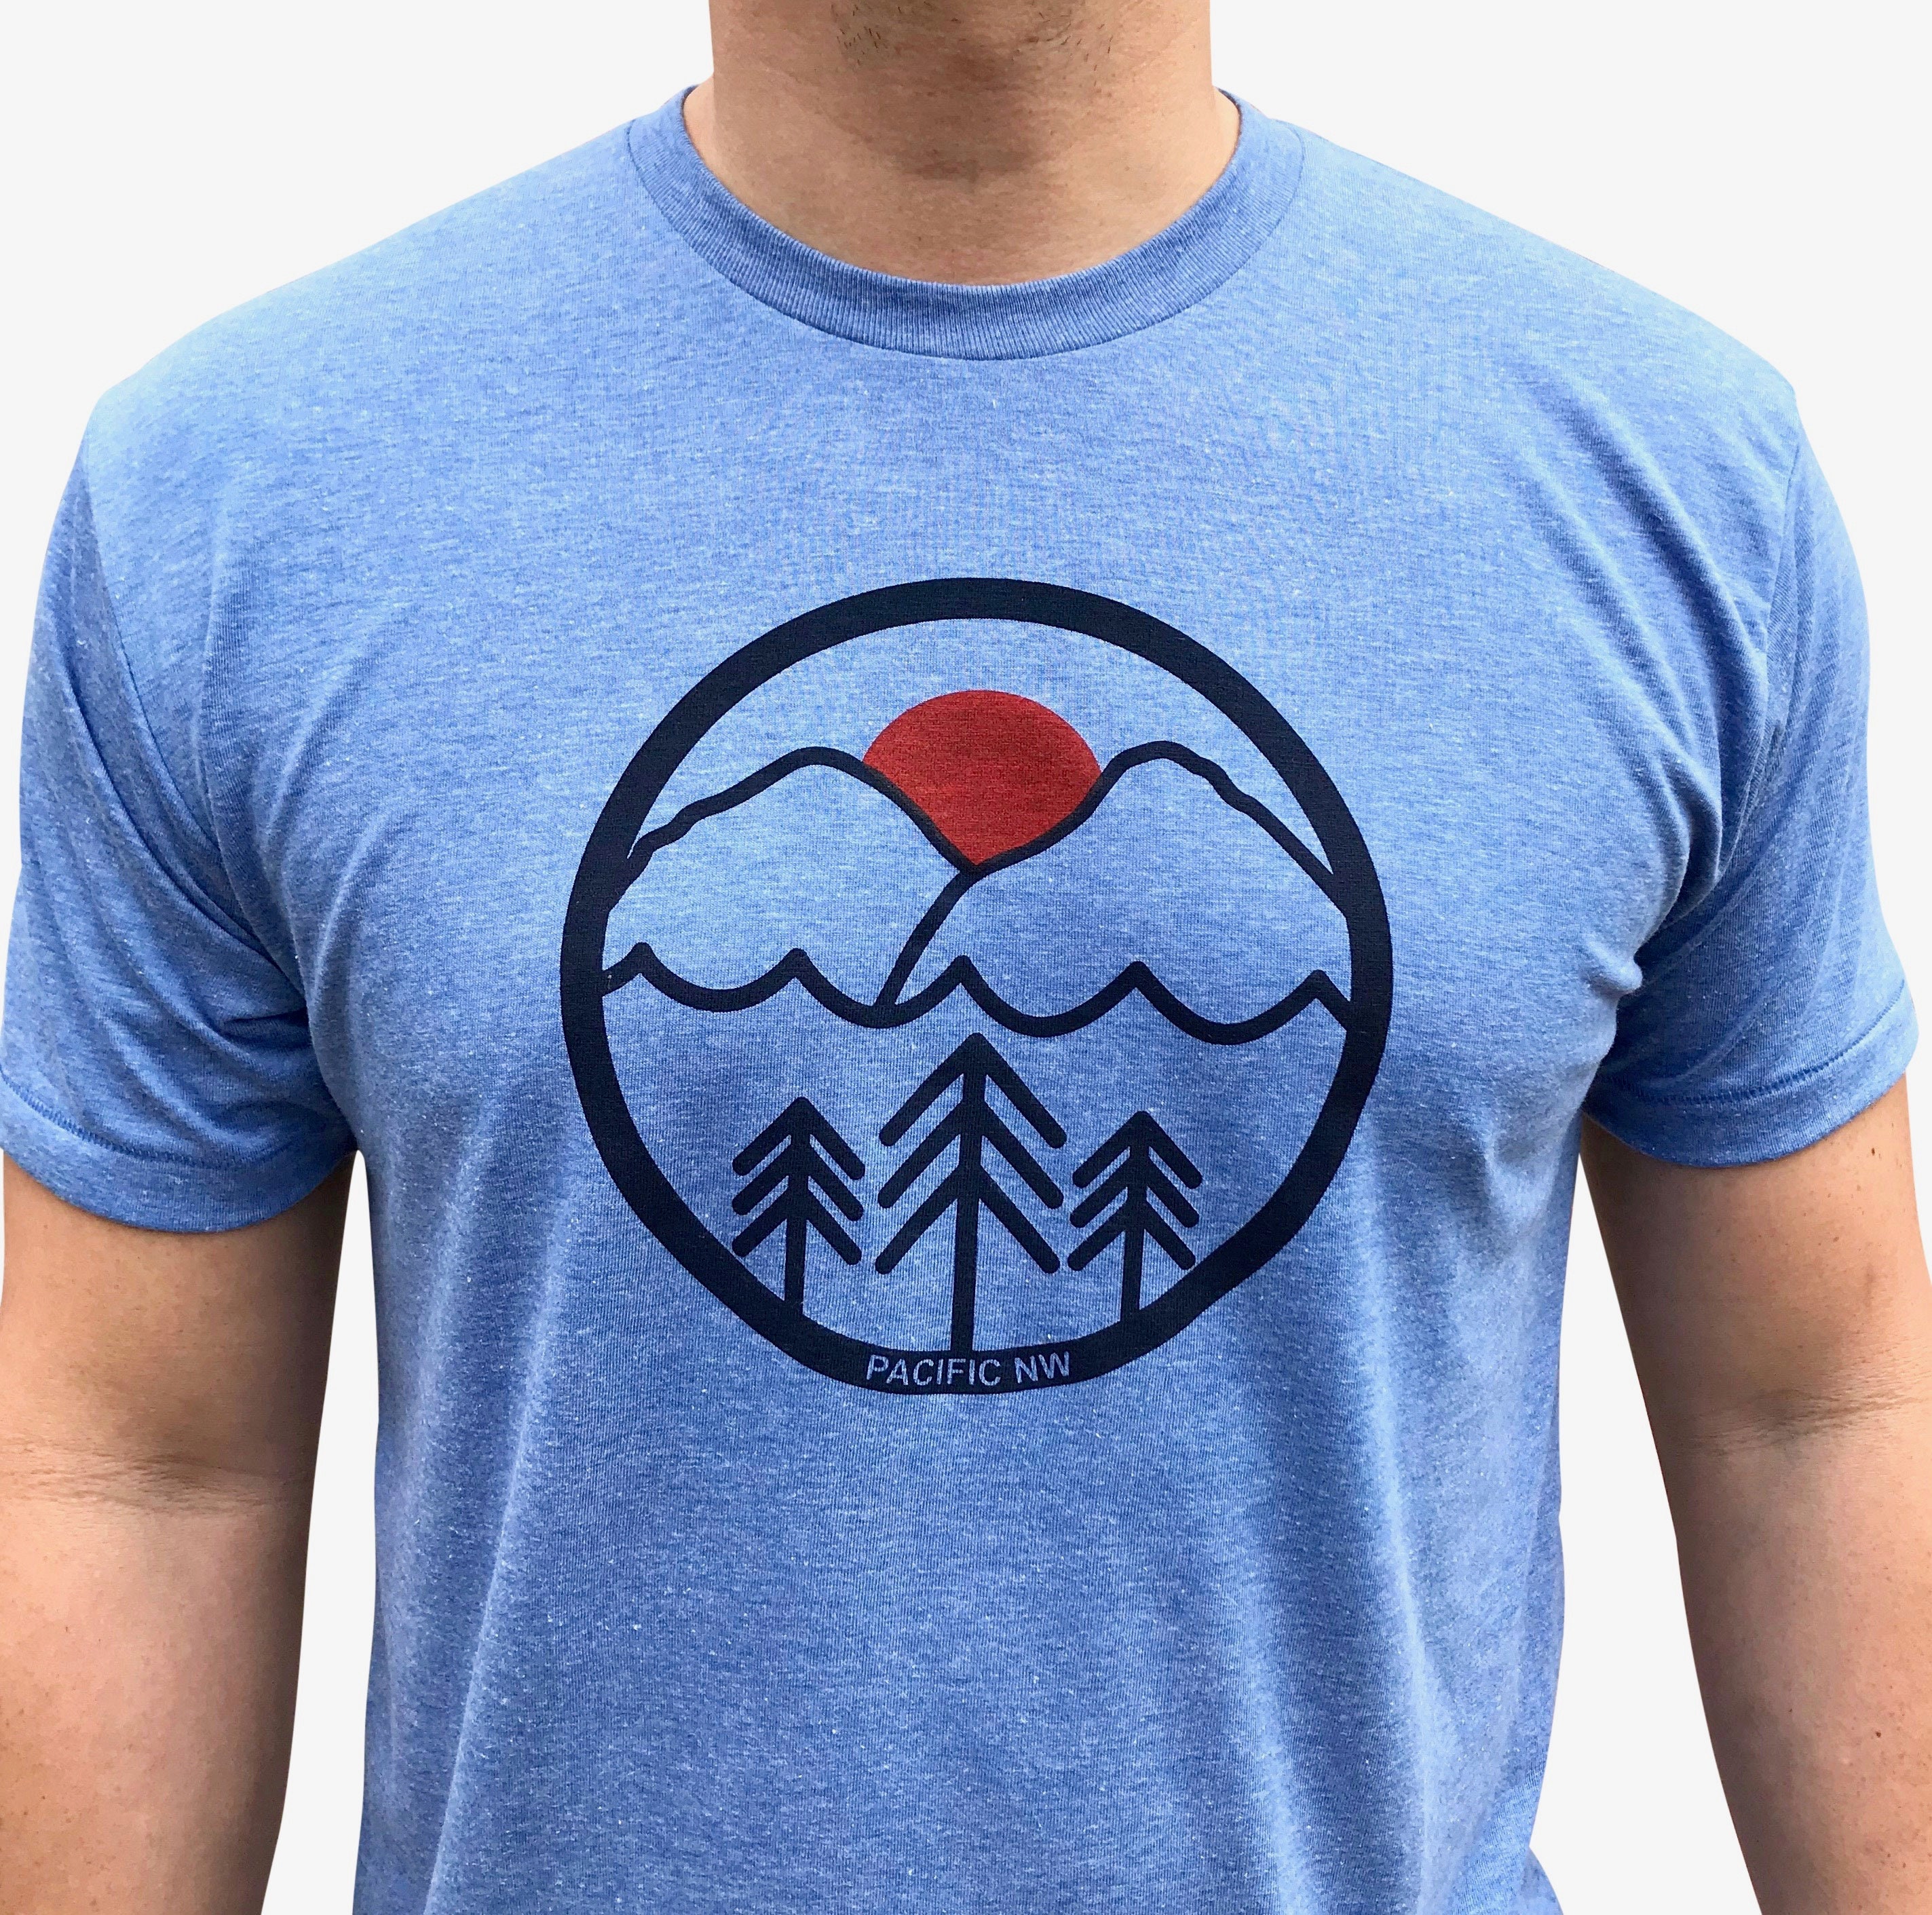 Pacific Northwest Tri Blend Men's/Unisex T-Shirt